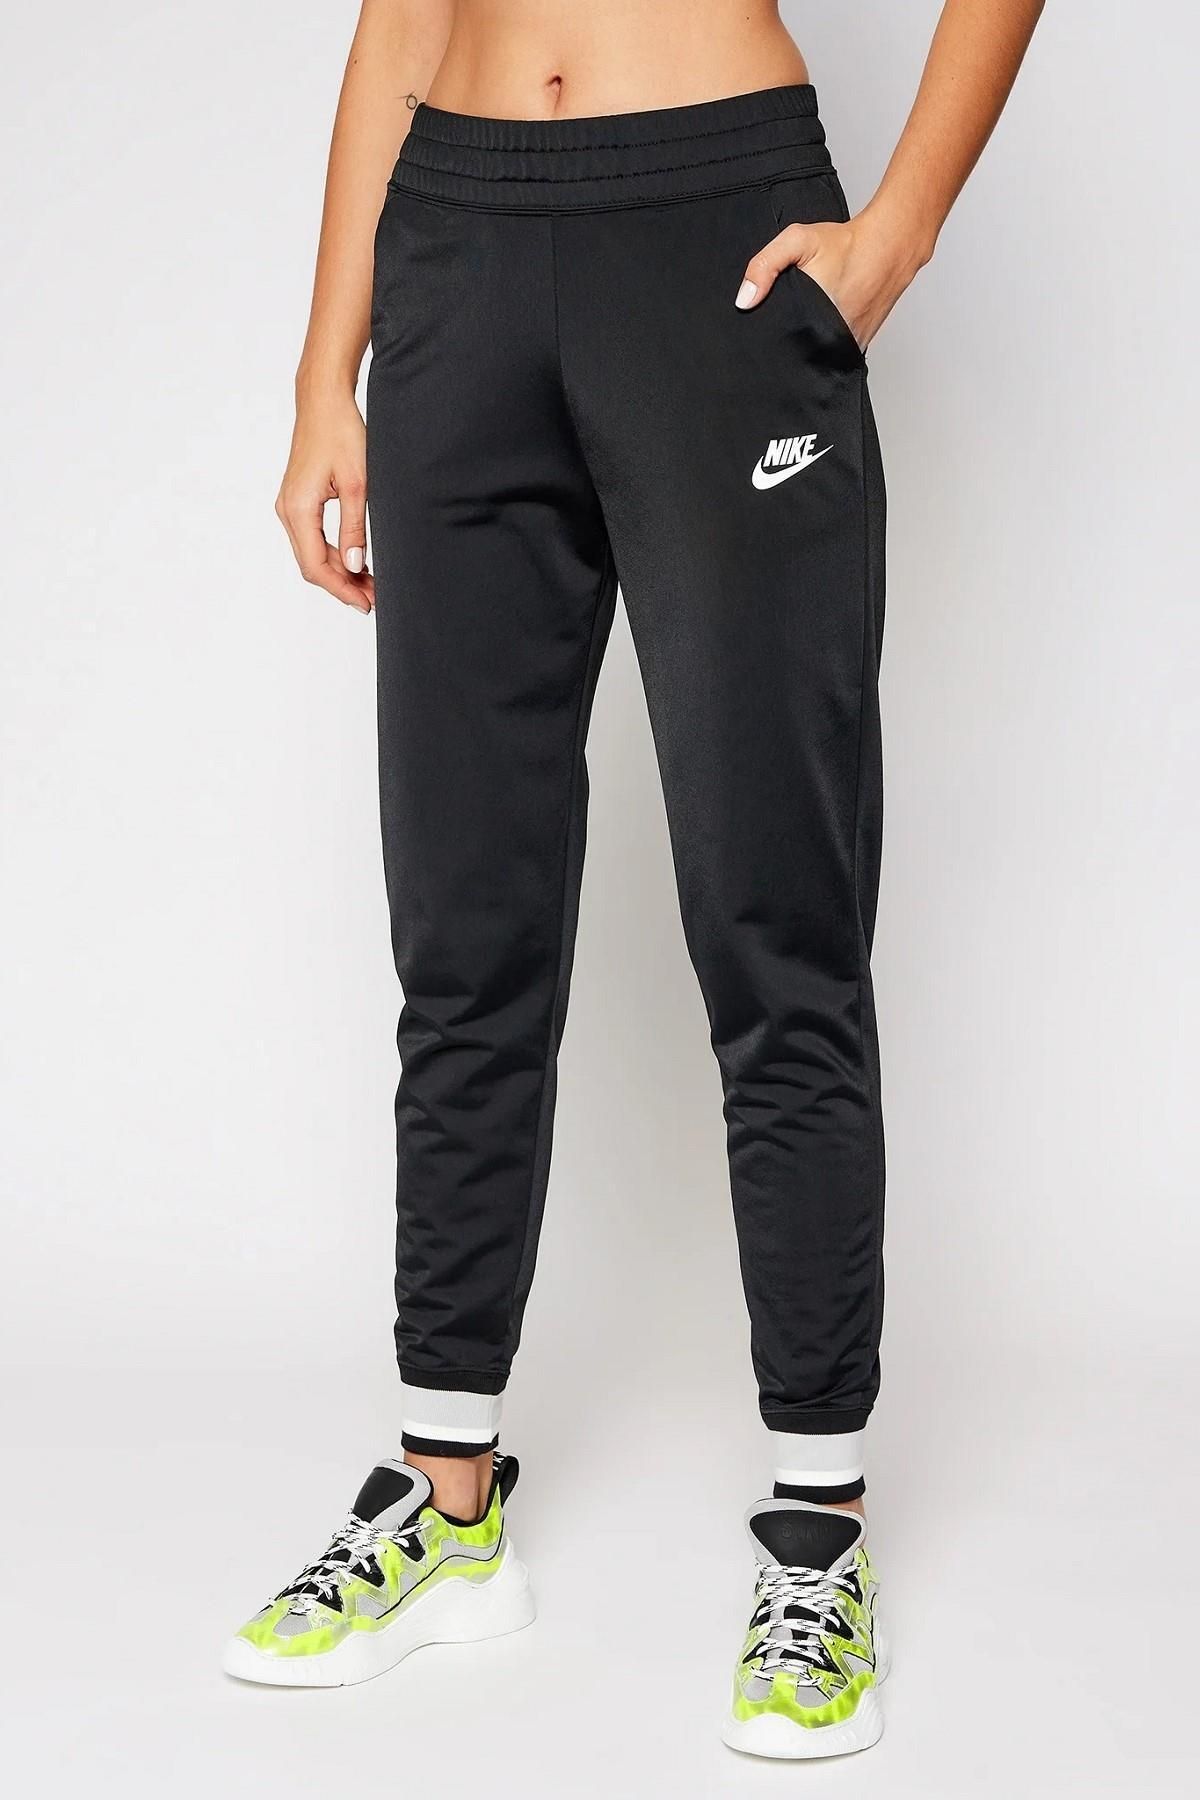 Nike Heritage Black Pants Siyah Eşofman Altı